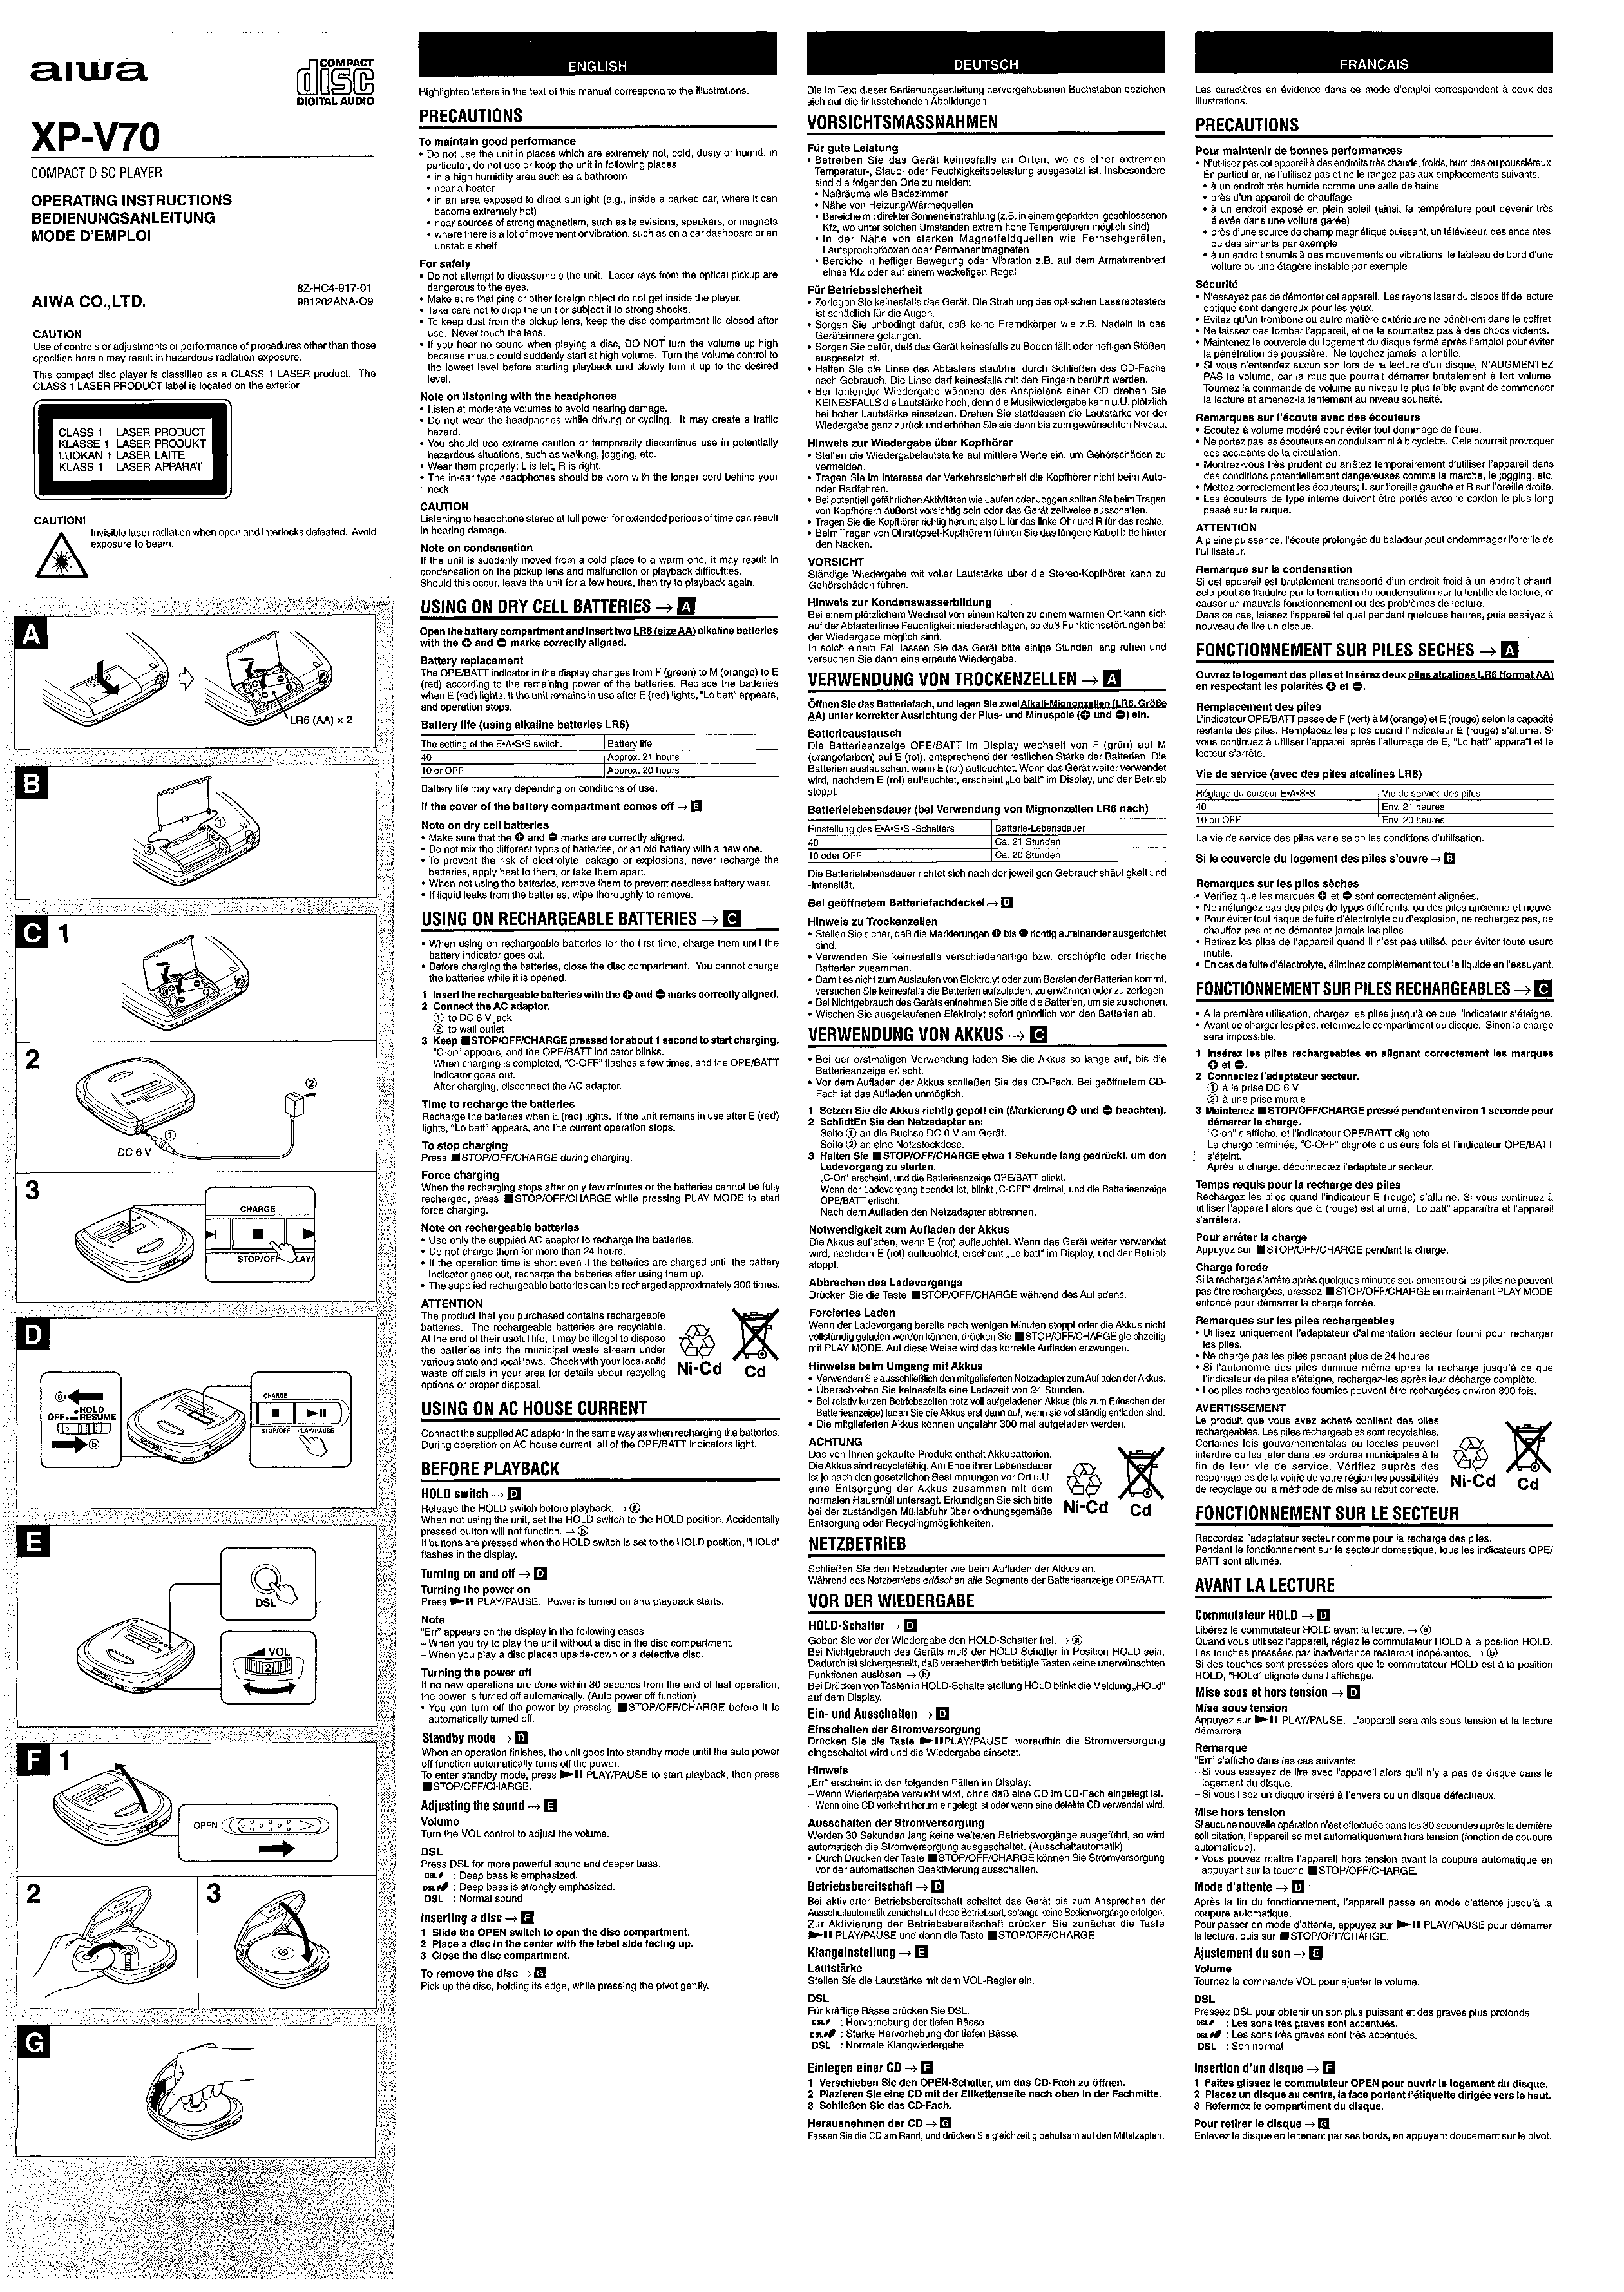 Aiwa XP-V70 User Manual